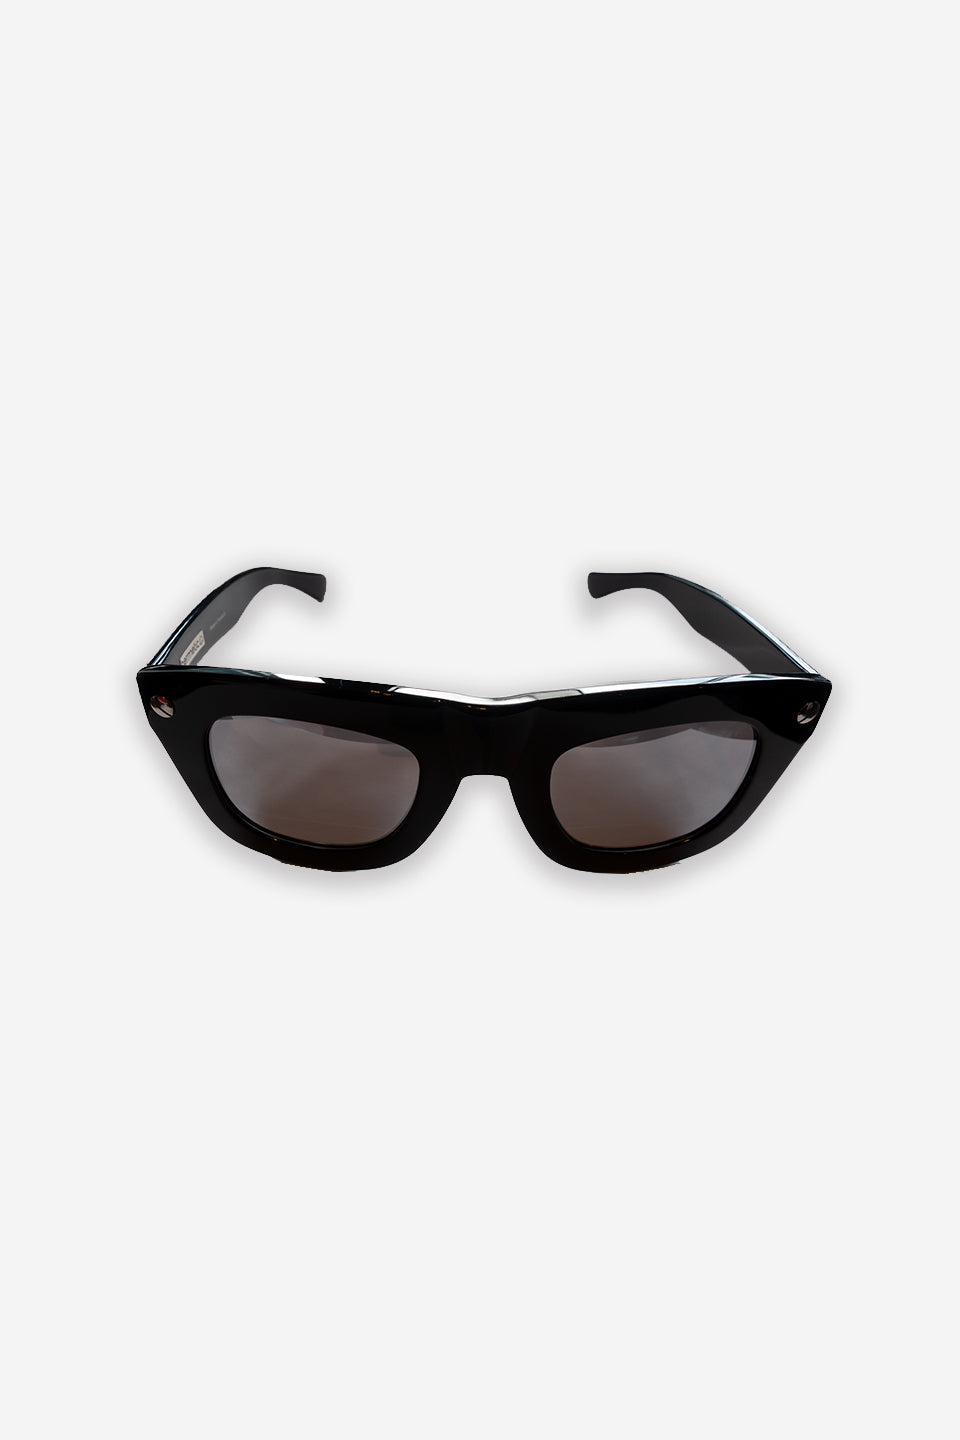 Silver Rhinestone Sunglasses (Clear Lens)